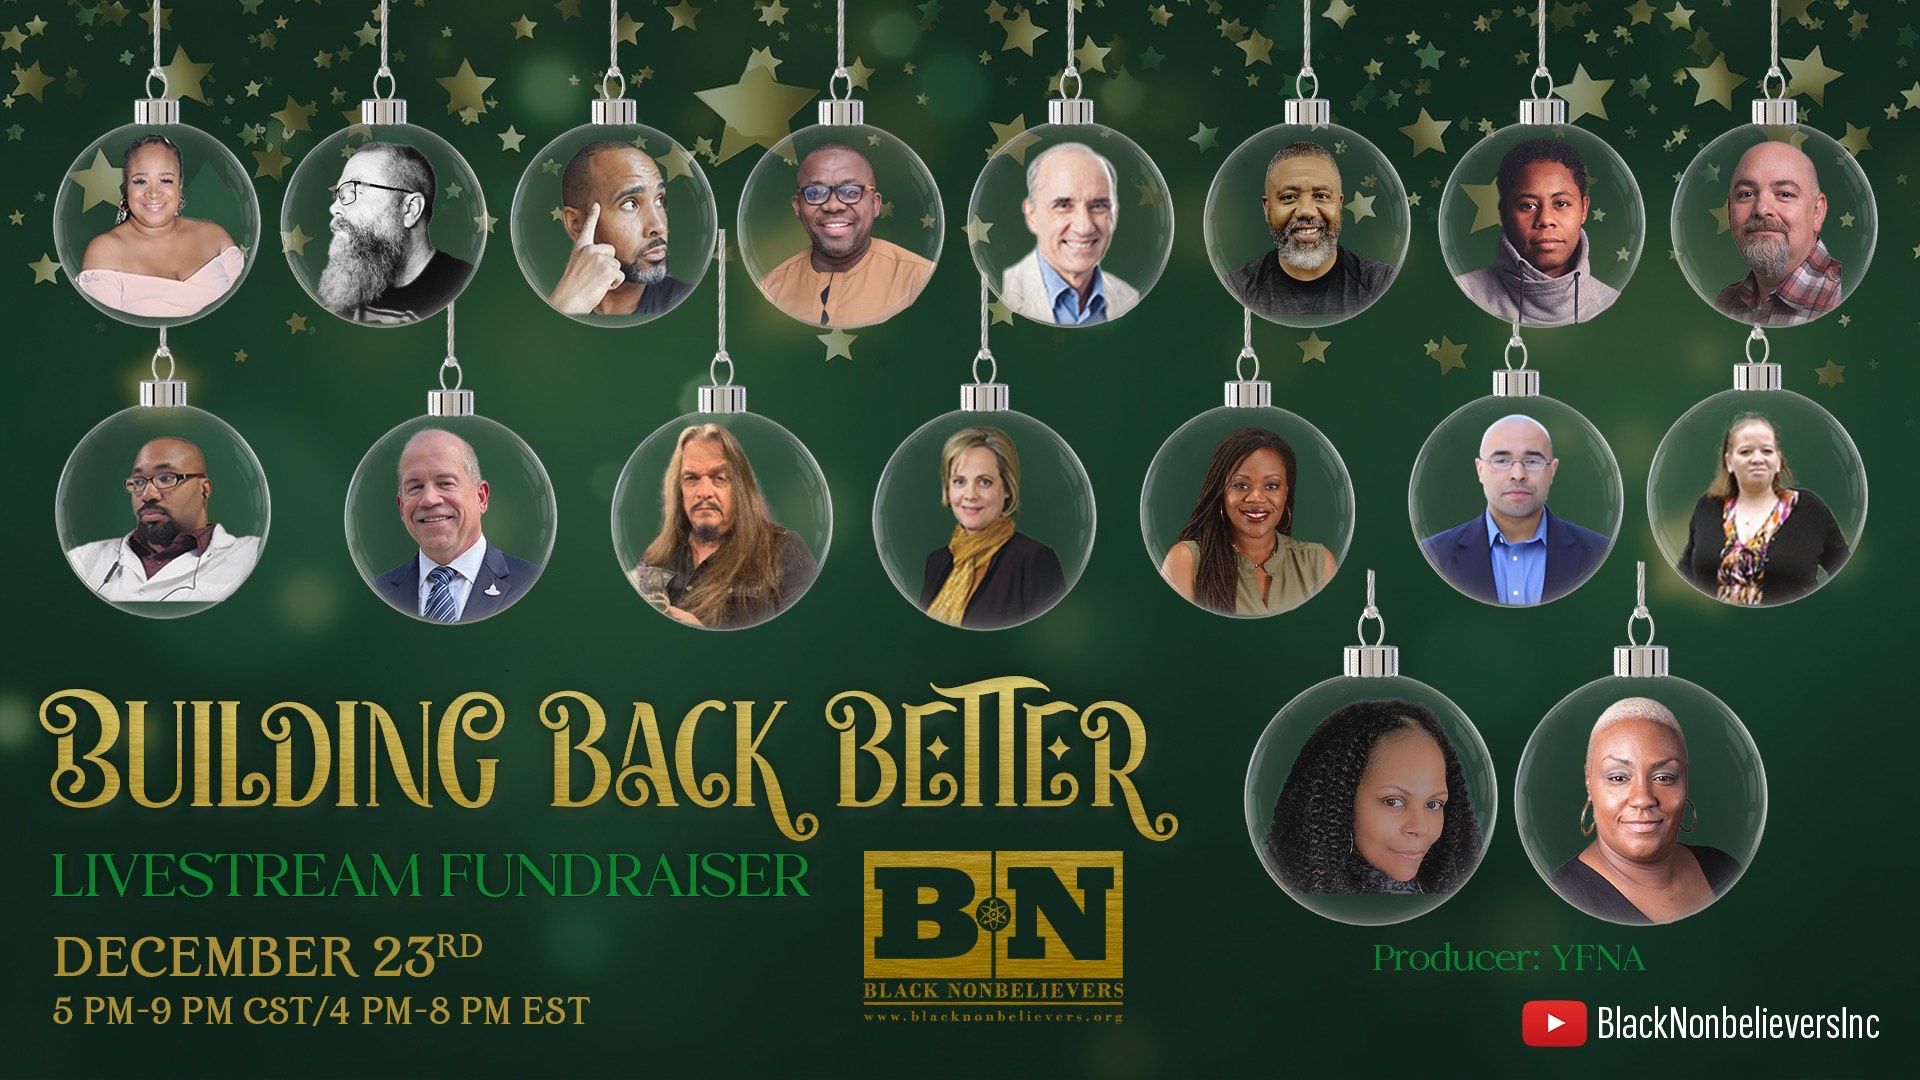 Banner for Building Back Better Livestream Fundraiser, hosted by Black Nonbelievers on December 23rd